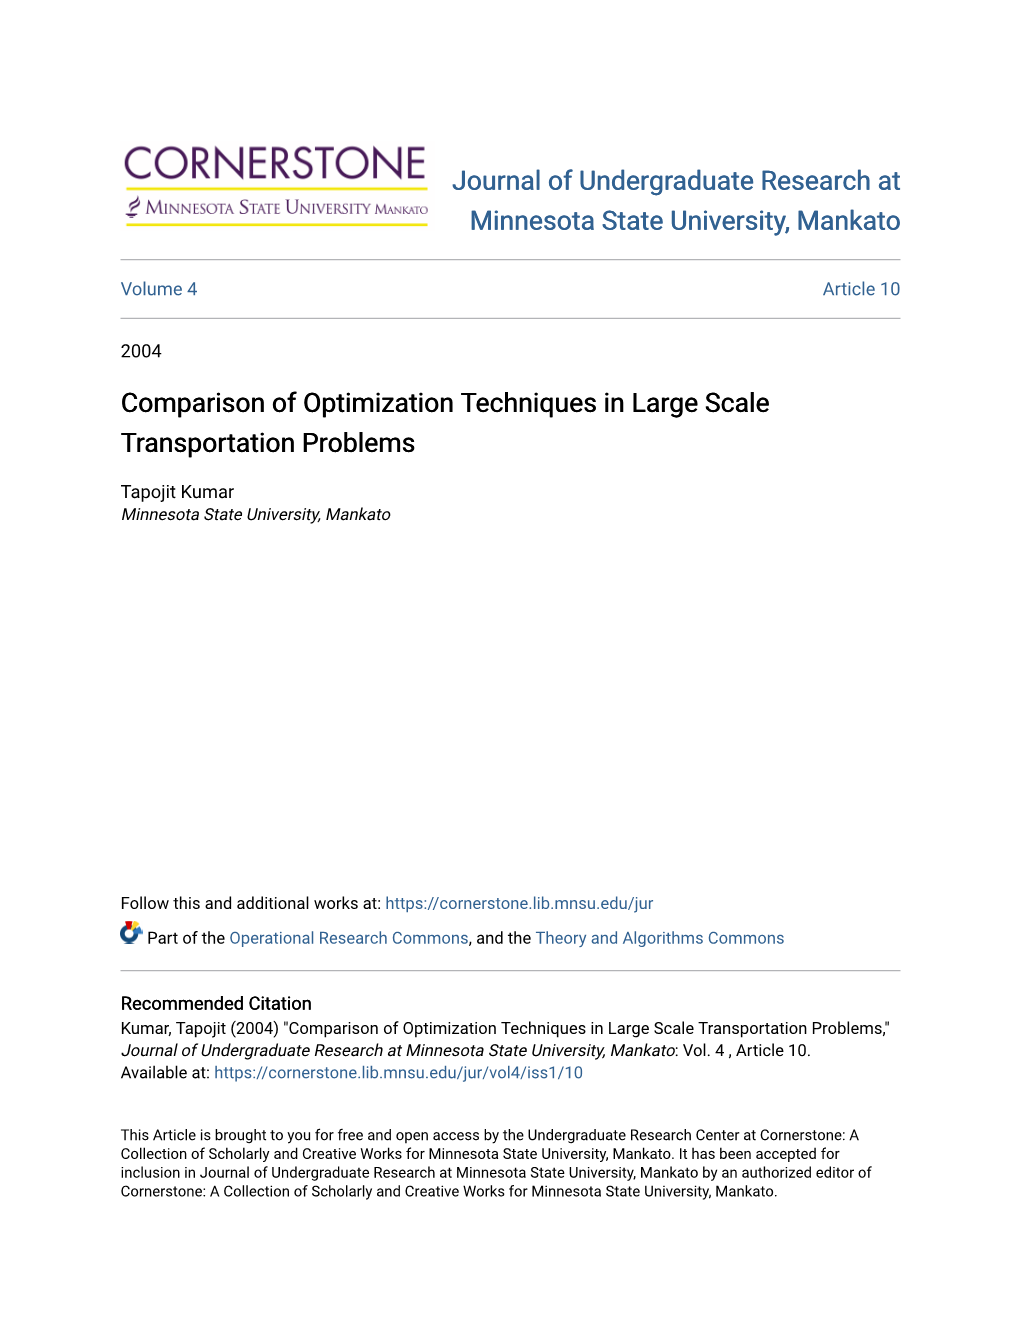 Comparison of Optimization Techniques in Large Scale Transportation Problems